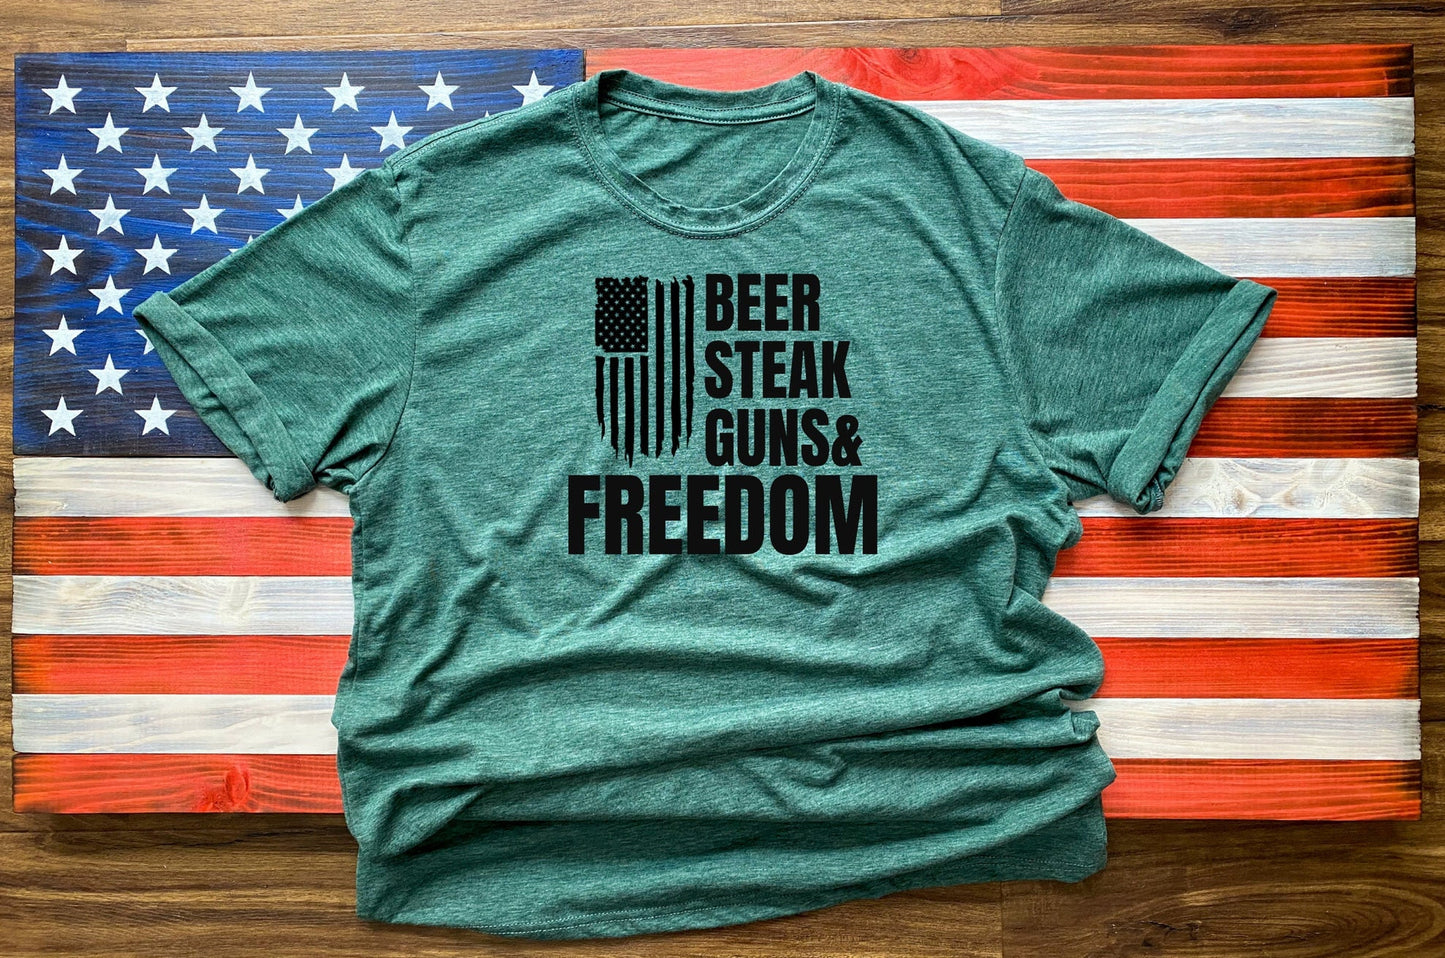 Beer, Steak, Guns & Freedom Shirt